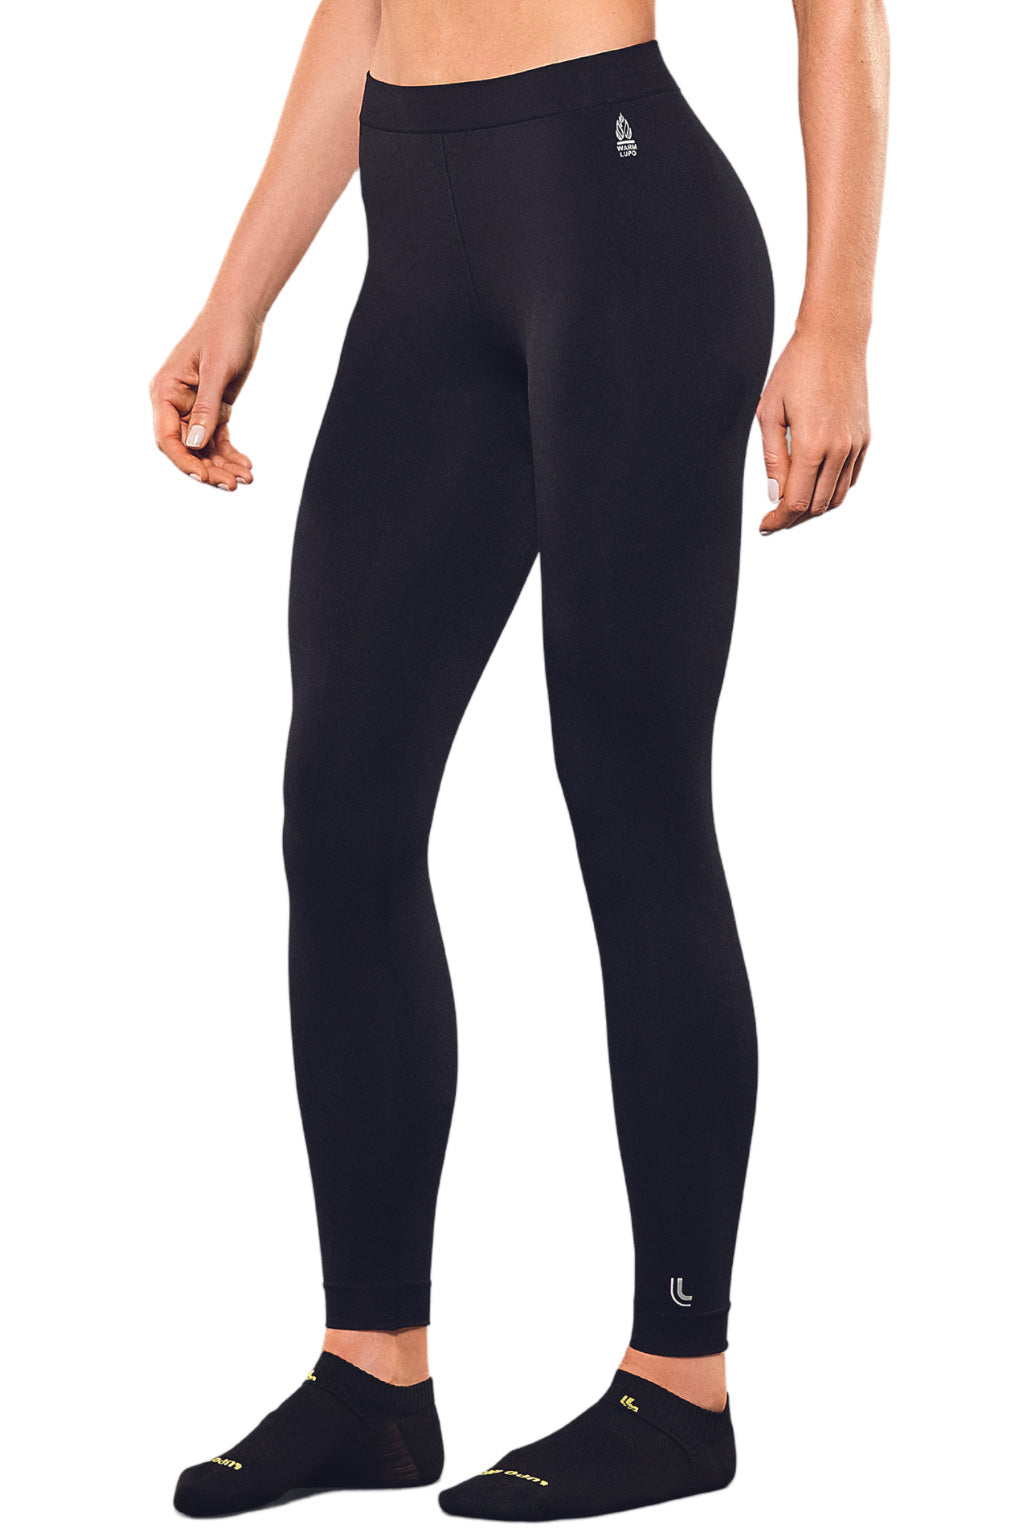 Black thermal leggings  Sports leggings and trousers for women